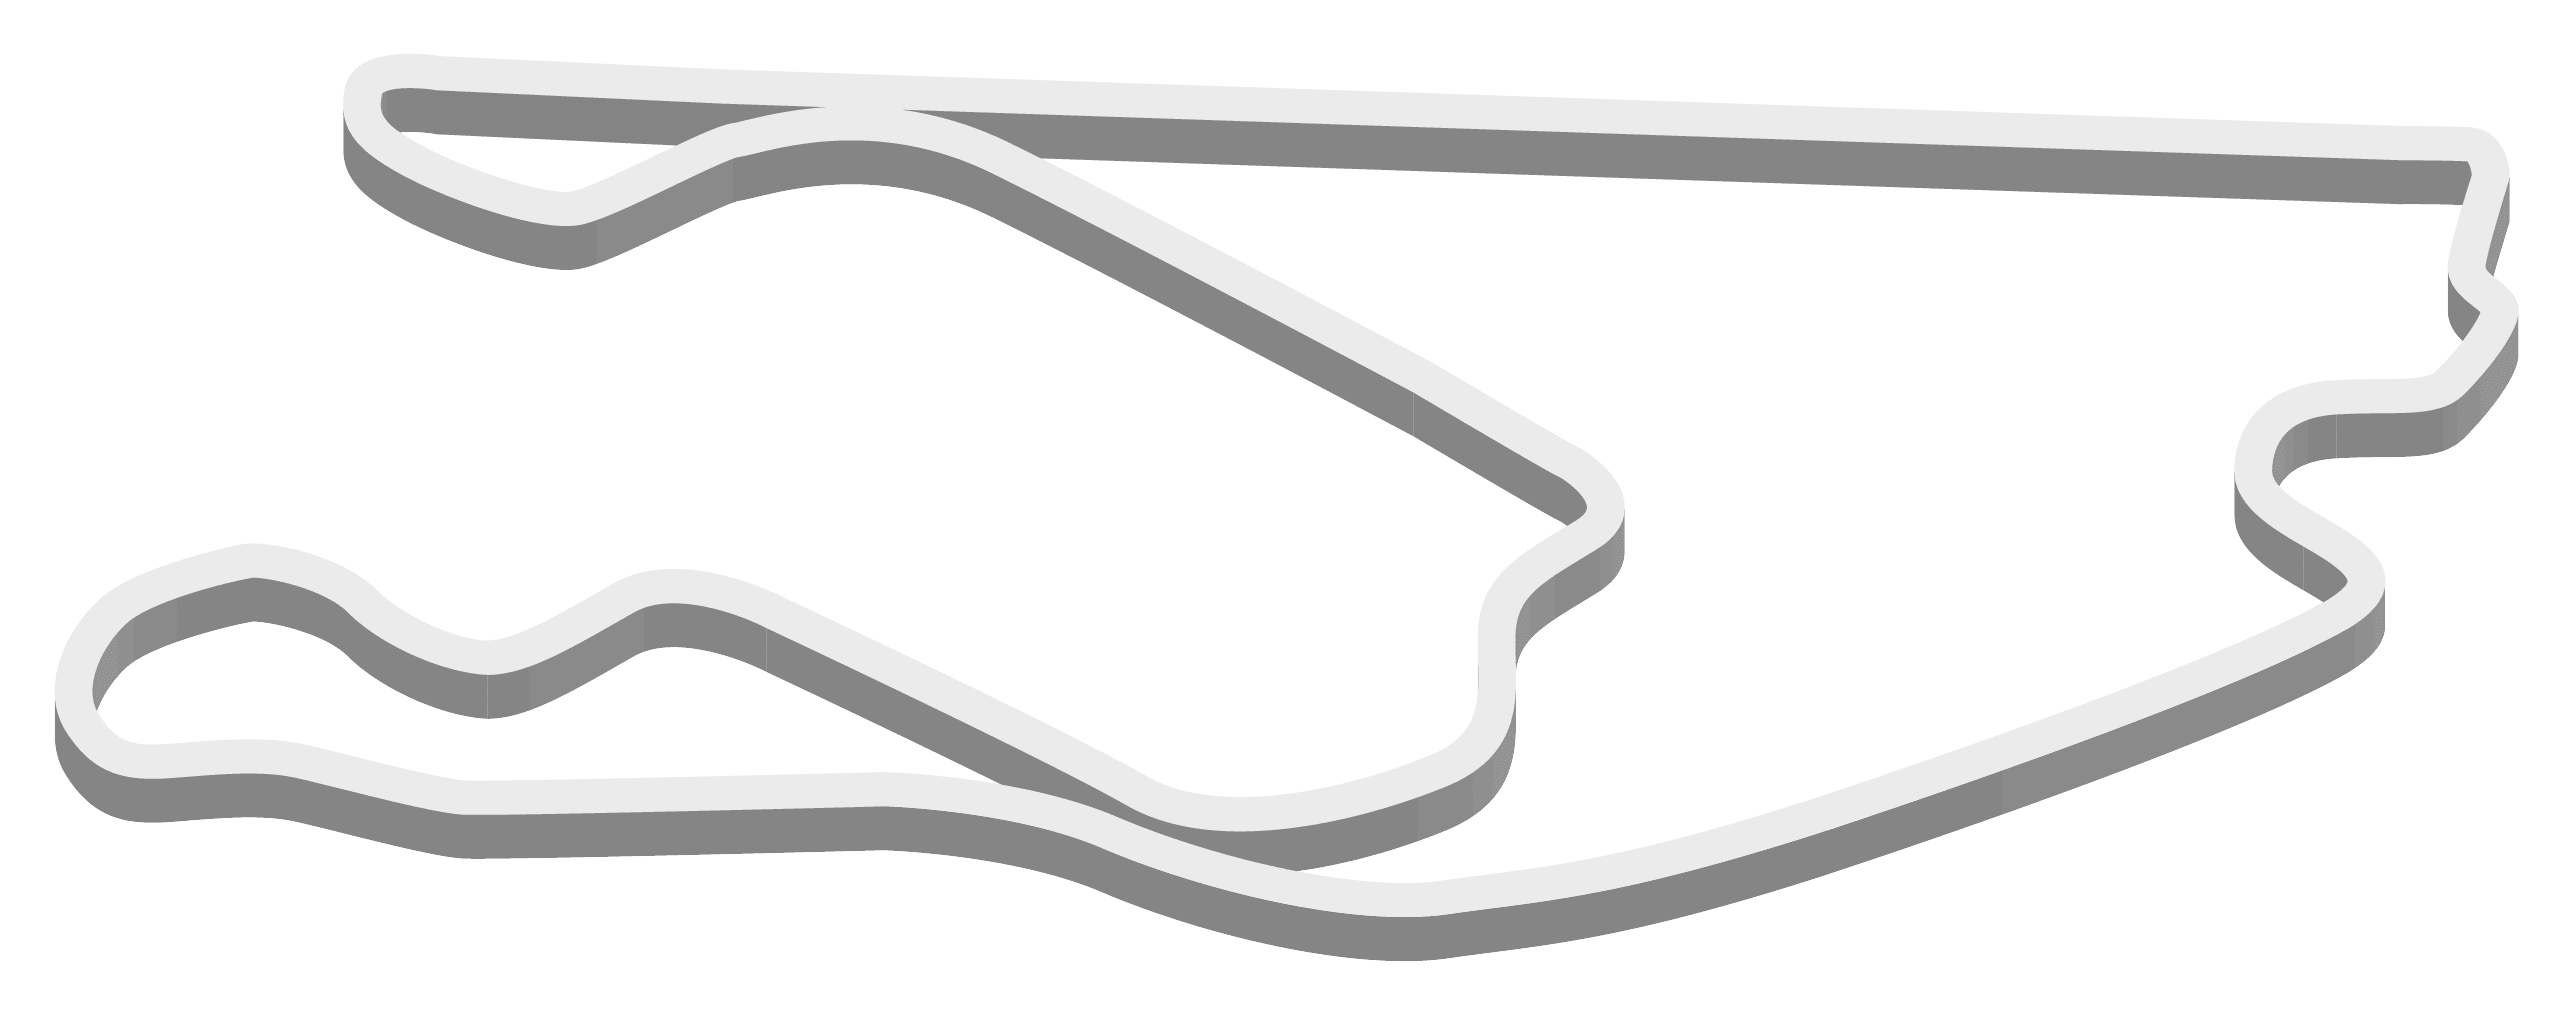 Miami International Autodrome - Racetrack Image